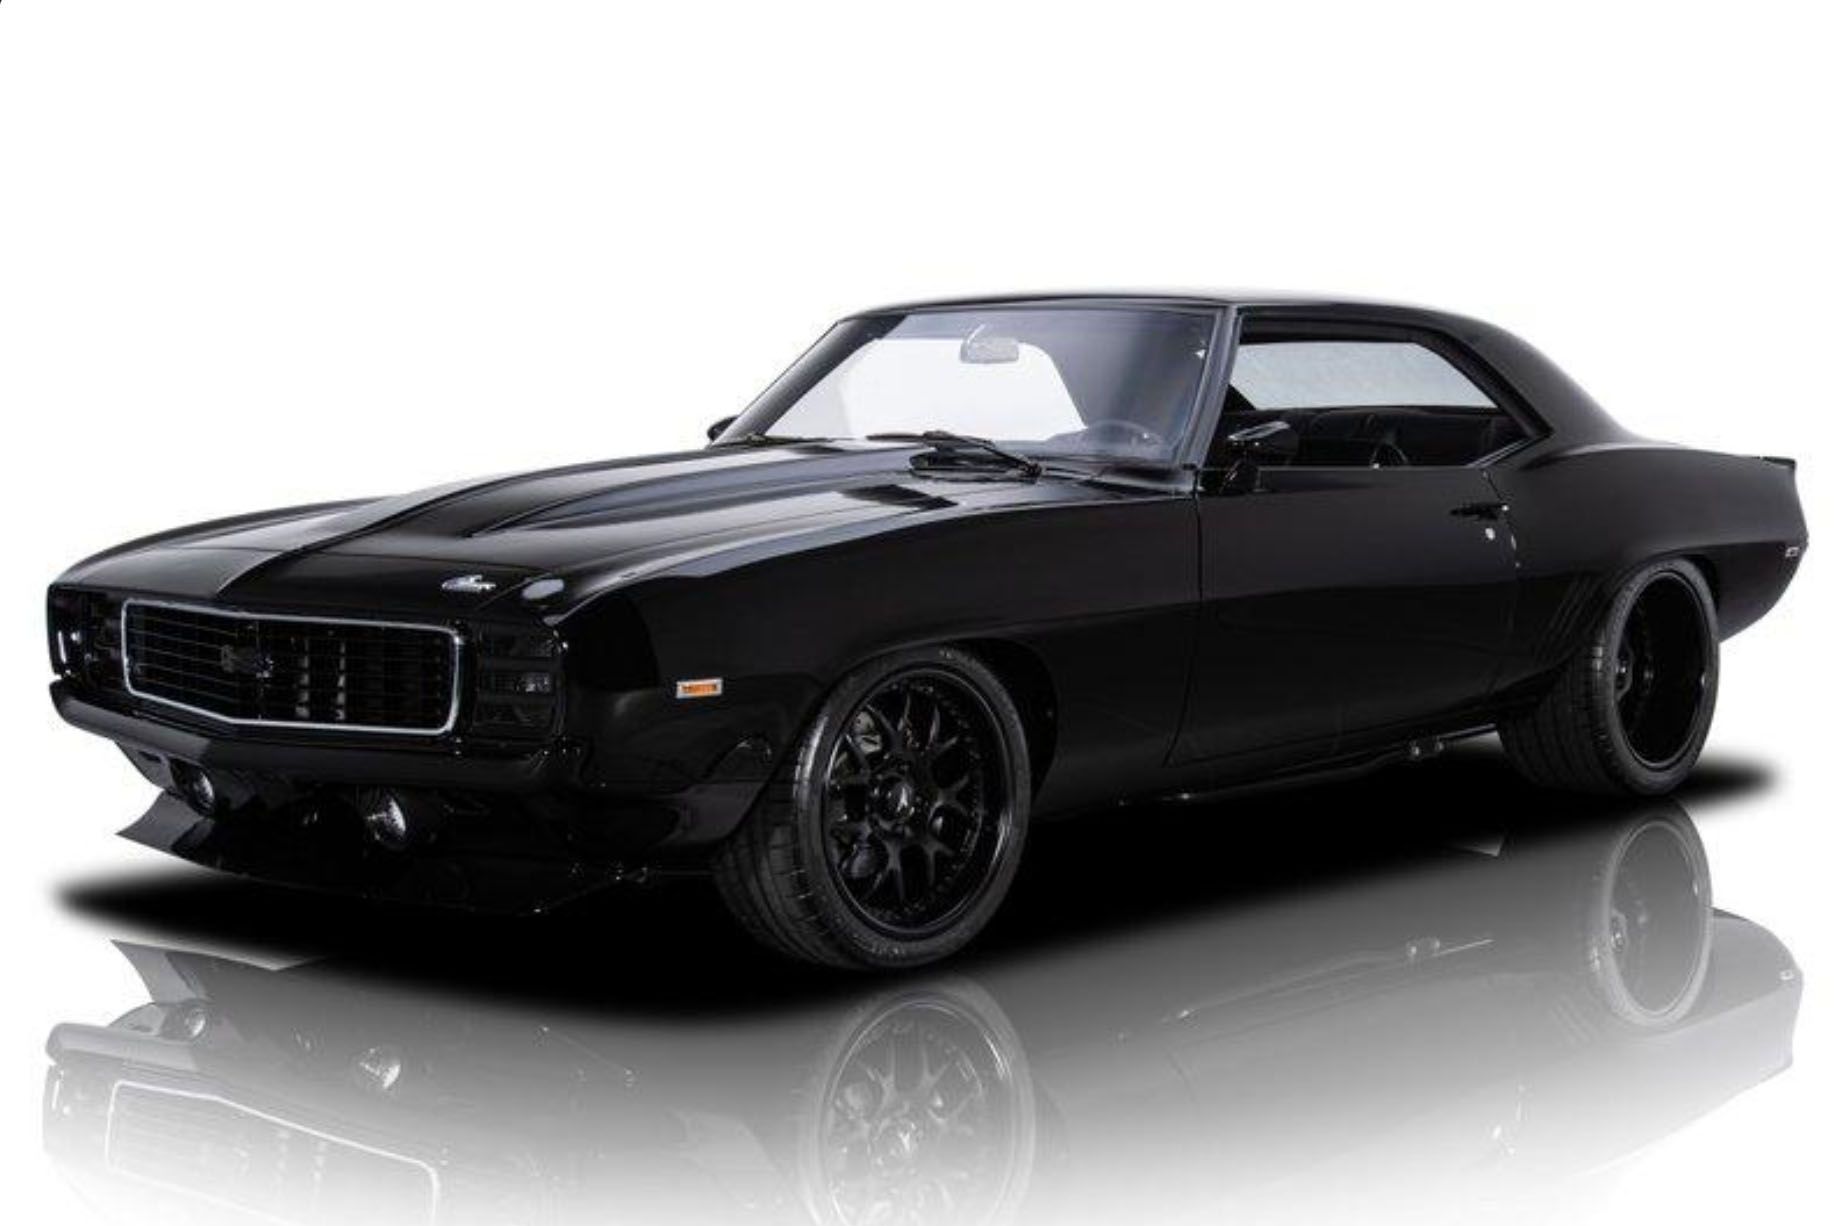 <img src="auction-1969-camaro-restomod.jpg" alt="A sinister 1969 Chevrolet Camaro Restomod powered by a supercharged LSA V8 engine">